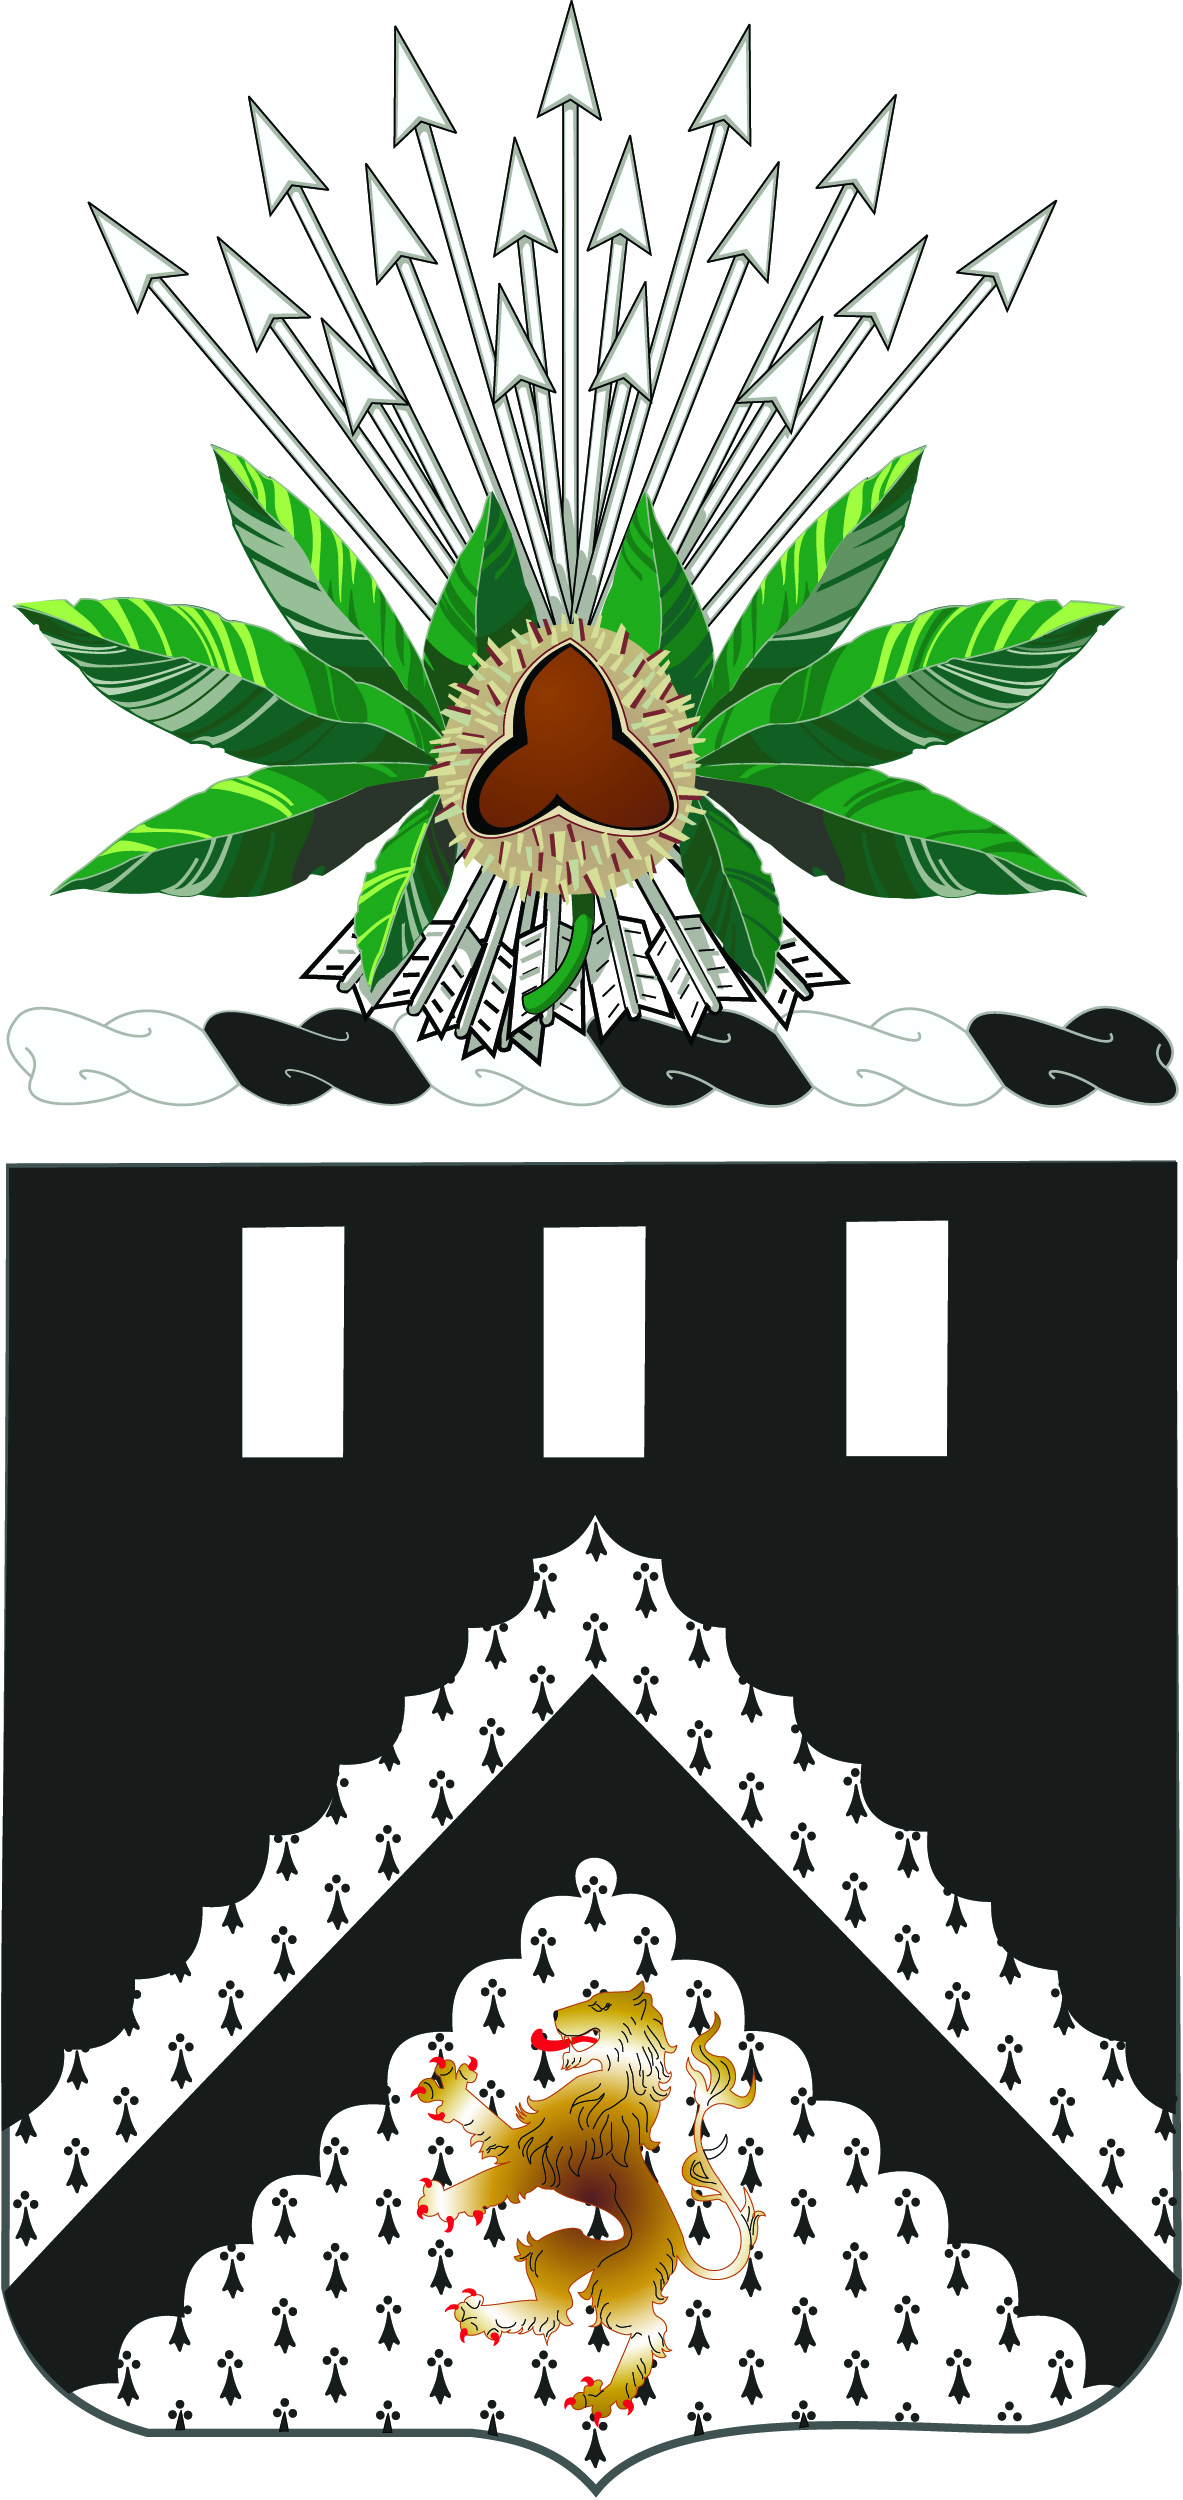 Ohio Army National Guard 112th Engineer Battalion insignia